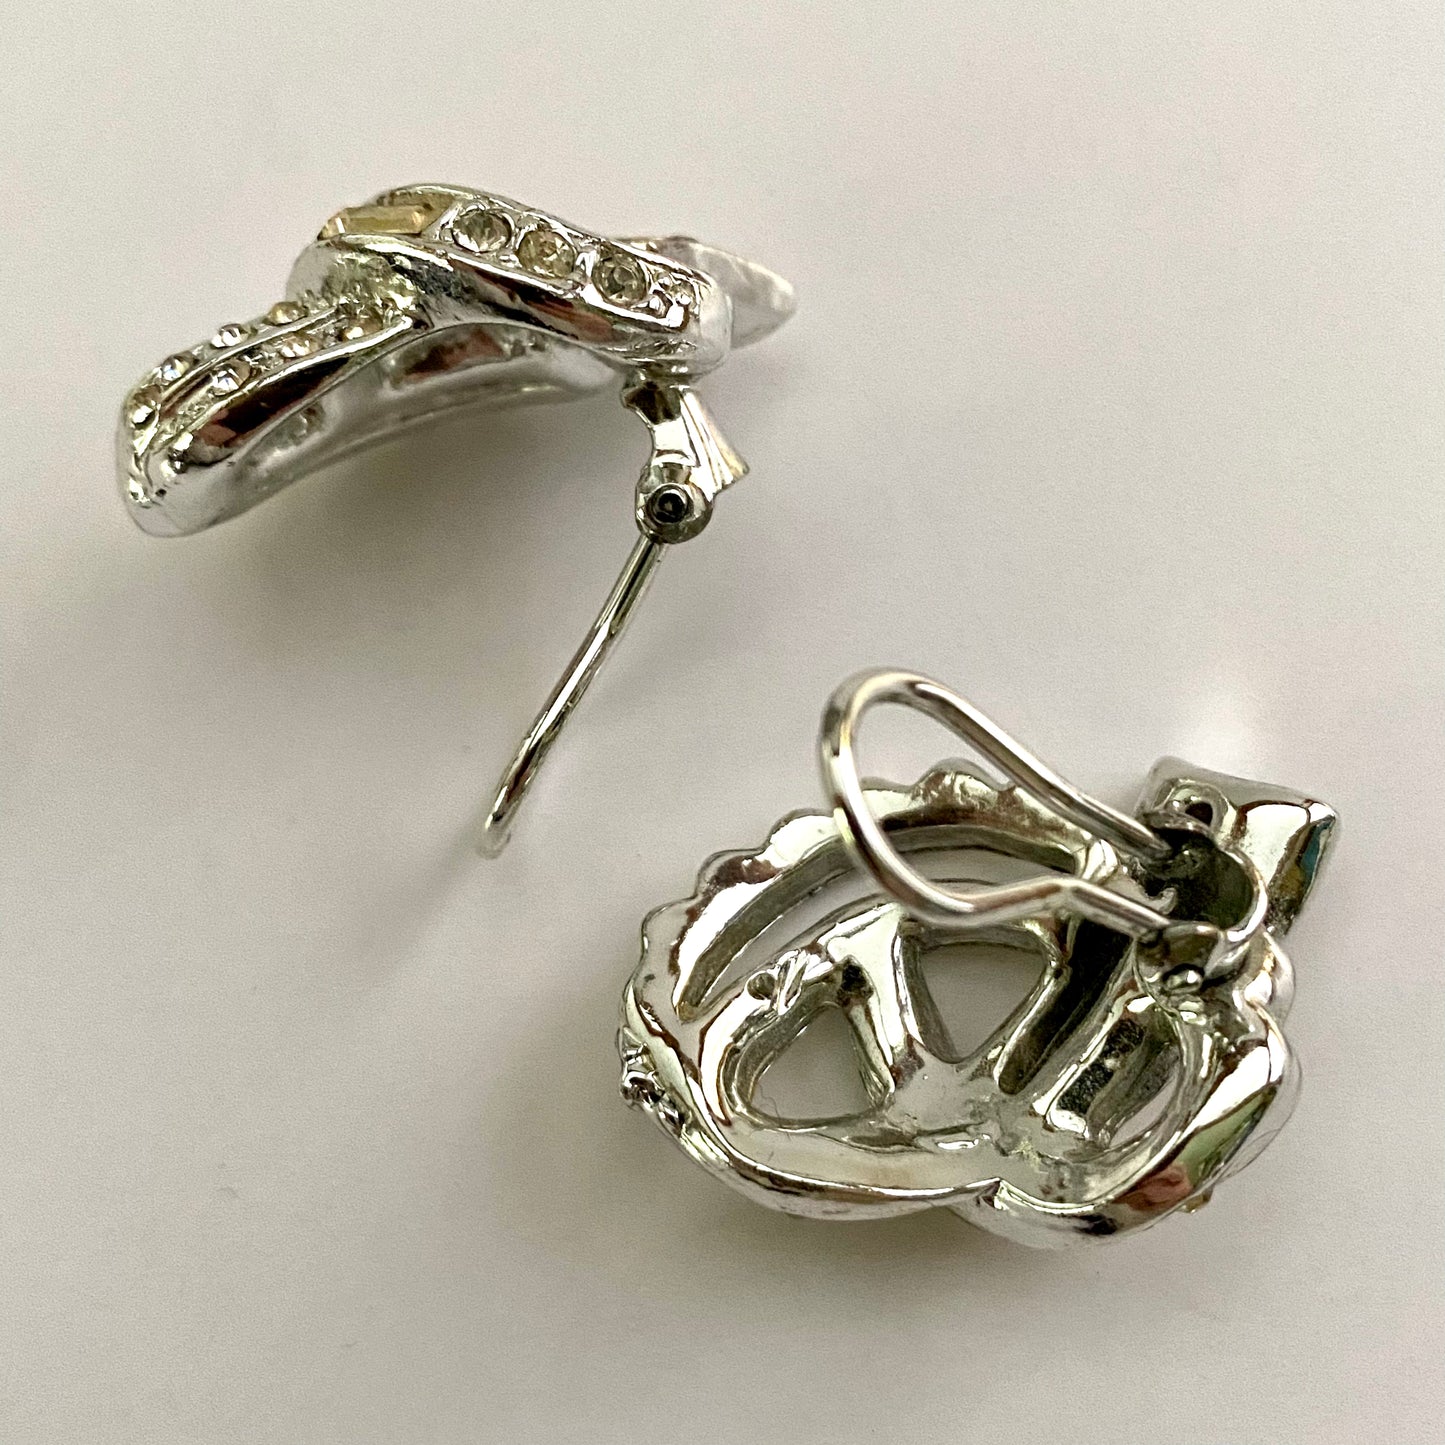 Late 50s/ Early 60s Rhinestone Earrings